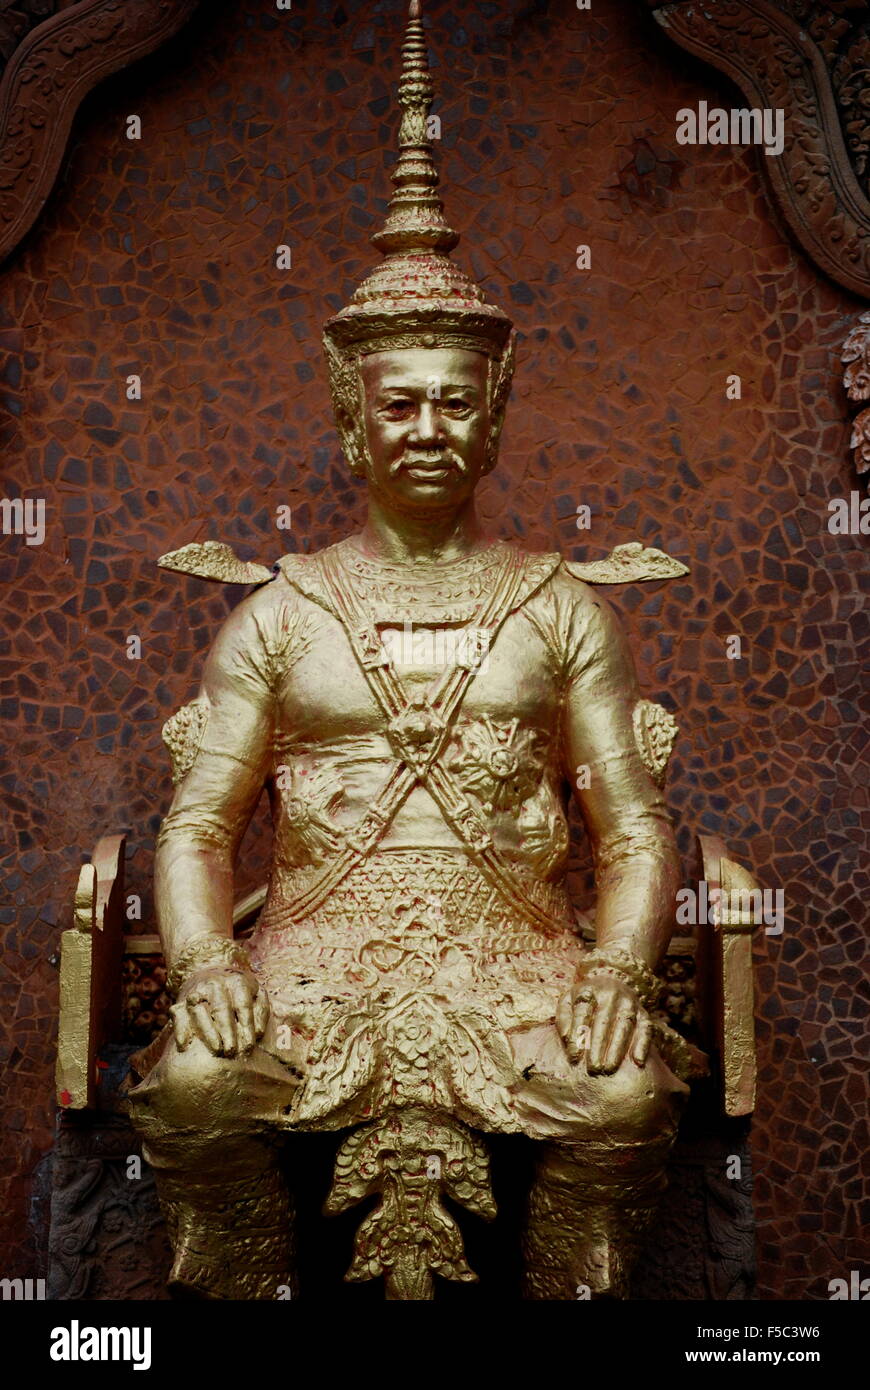 Goldene Statue eines Königs in Phnom Penh Kambodscha Stockfoto